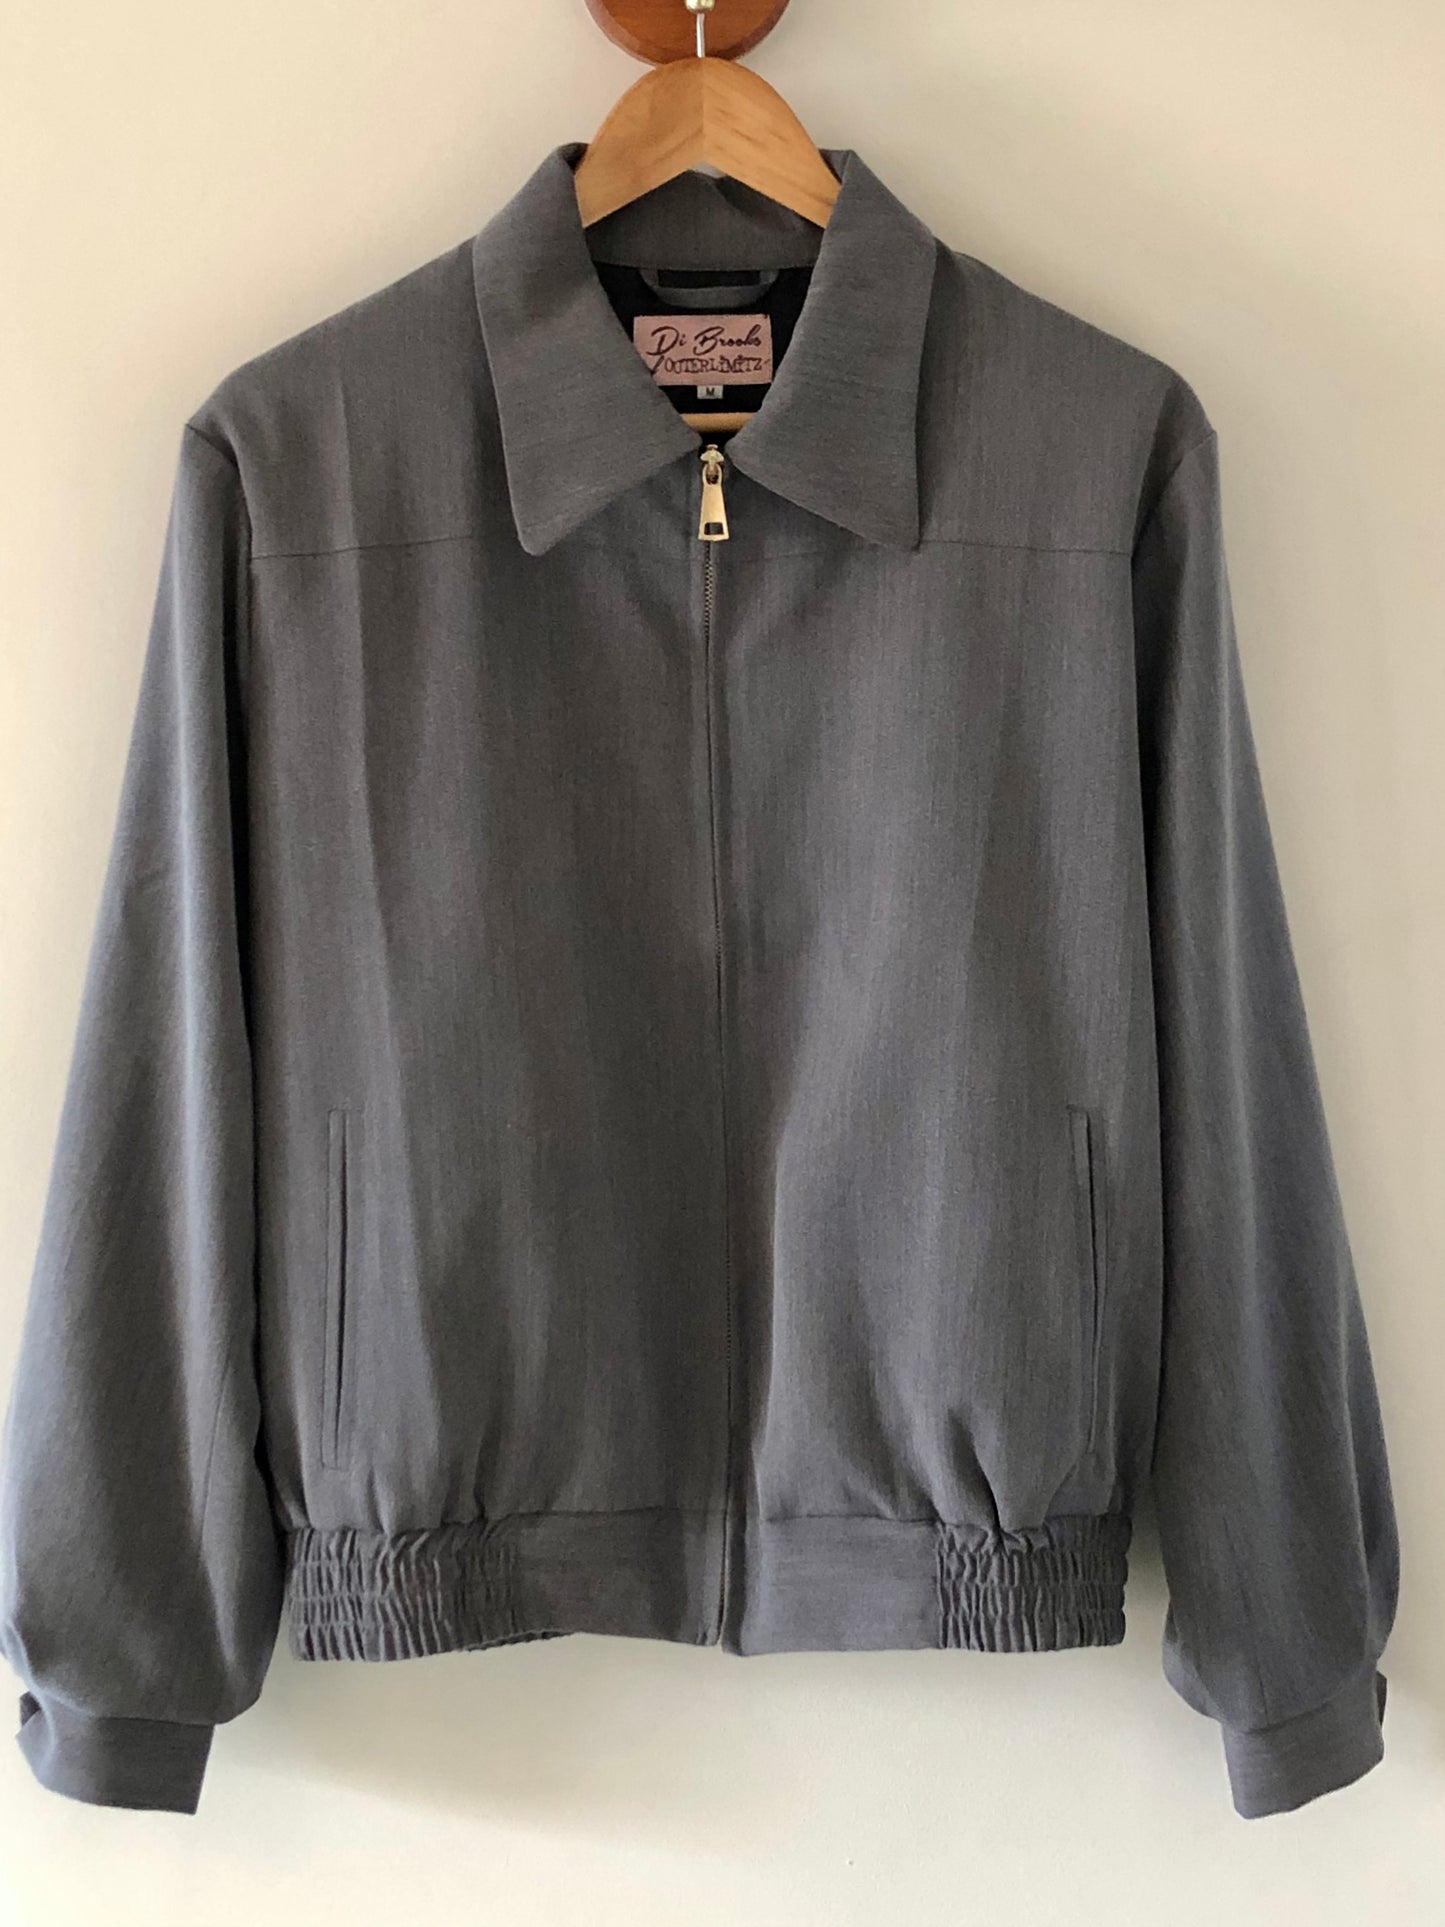 Mens 1950s vintage style gab jacket in grey fleck M XL 2XL